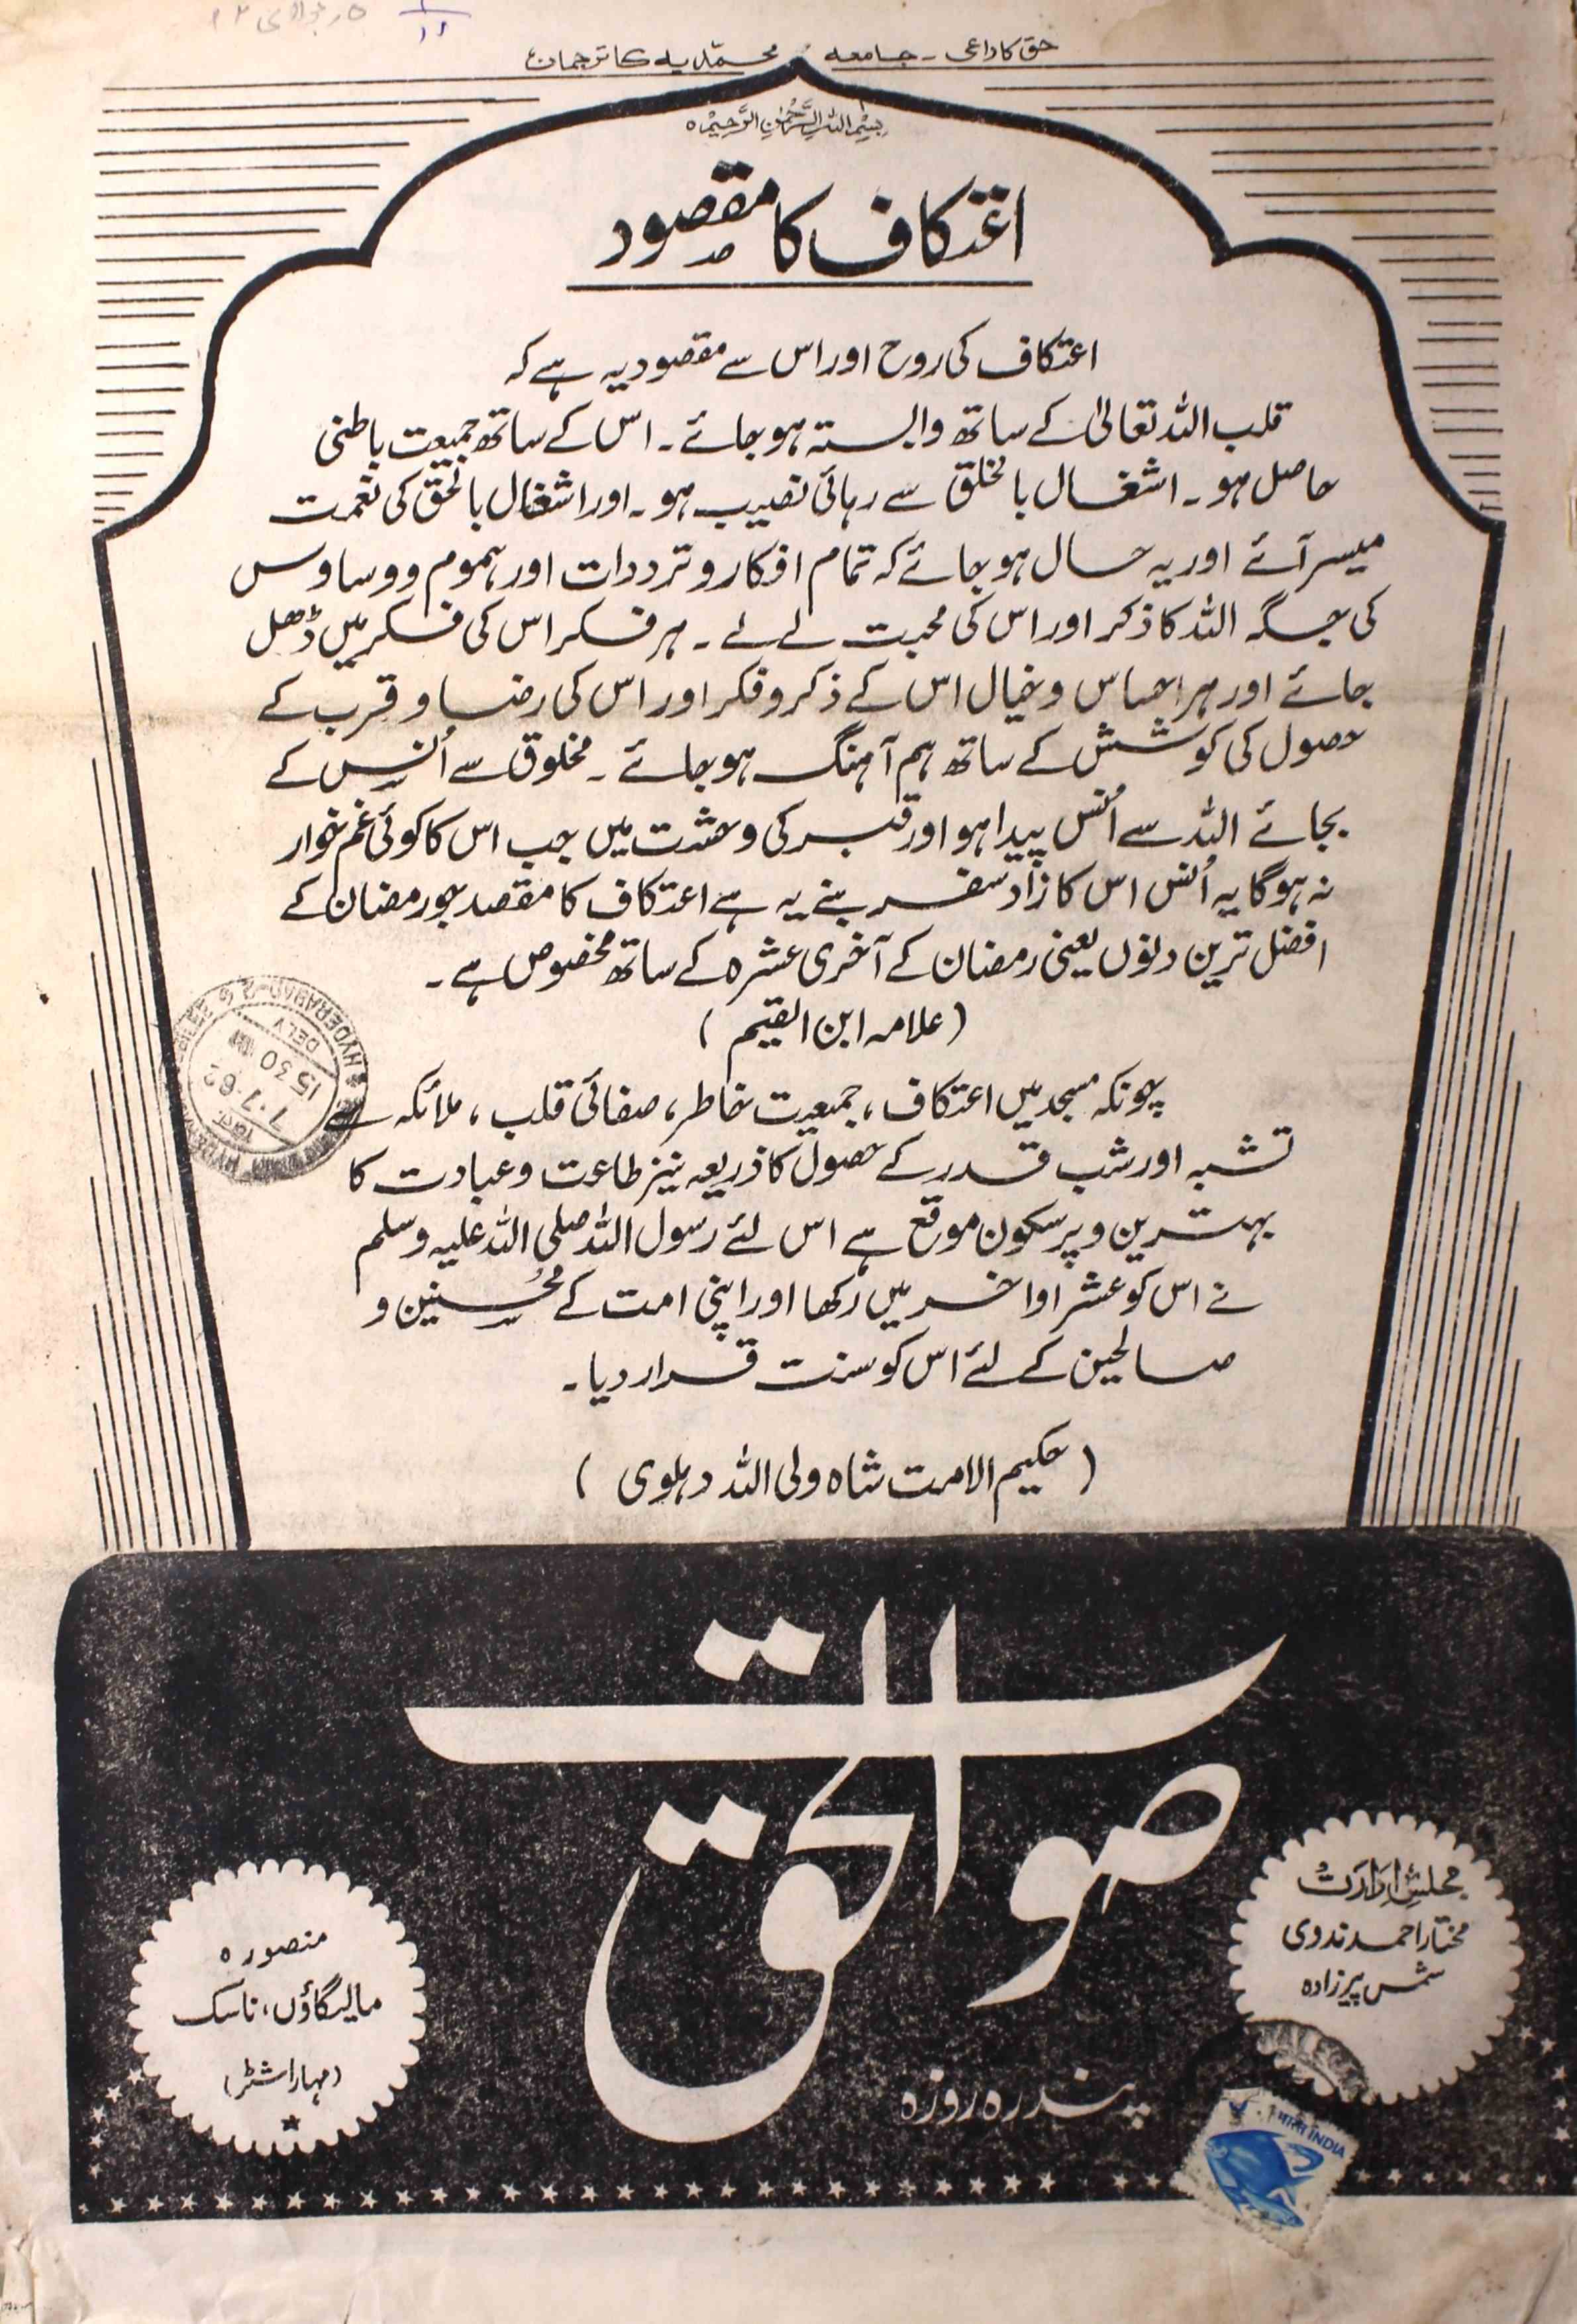 Sawt Al Haq Jild 2 Shumara 11 July 1982-Svk